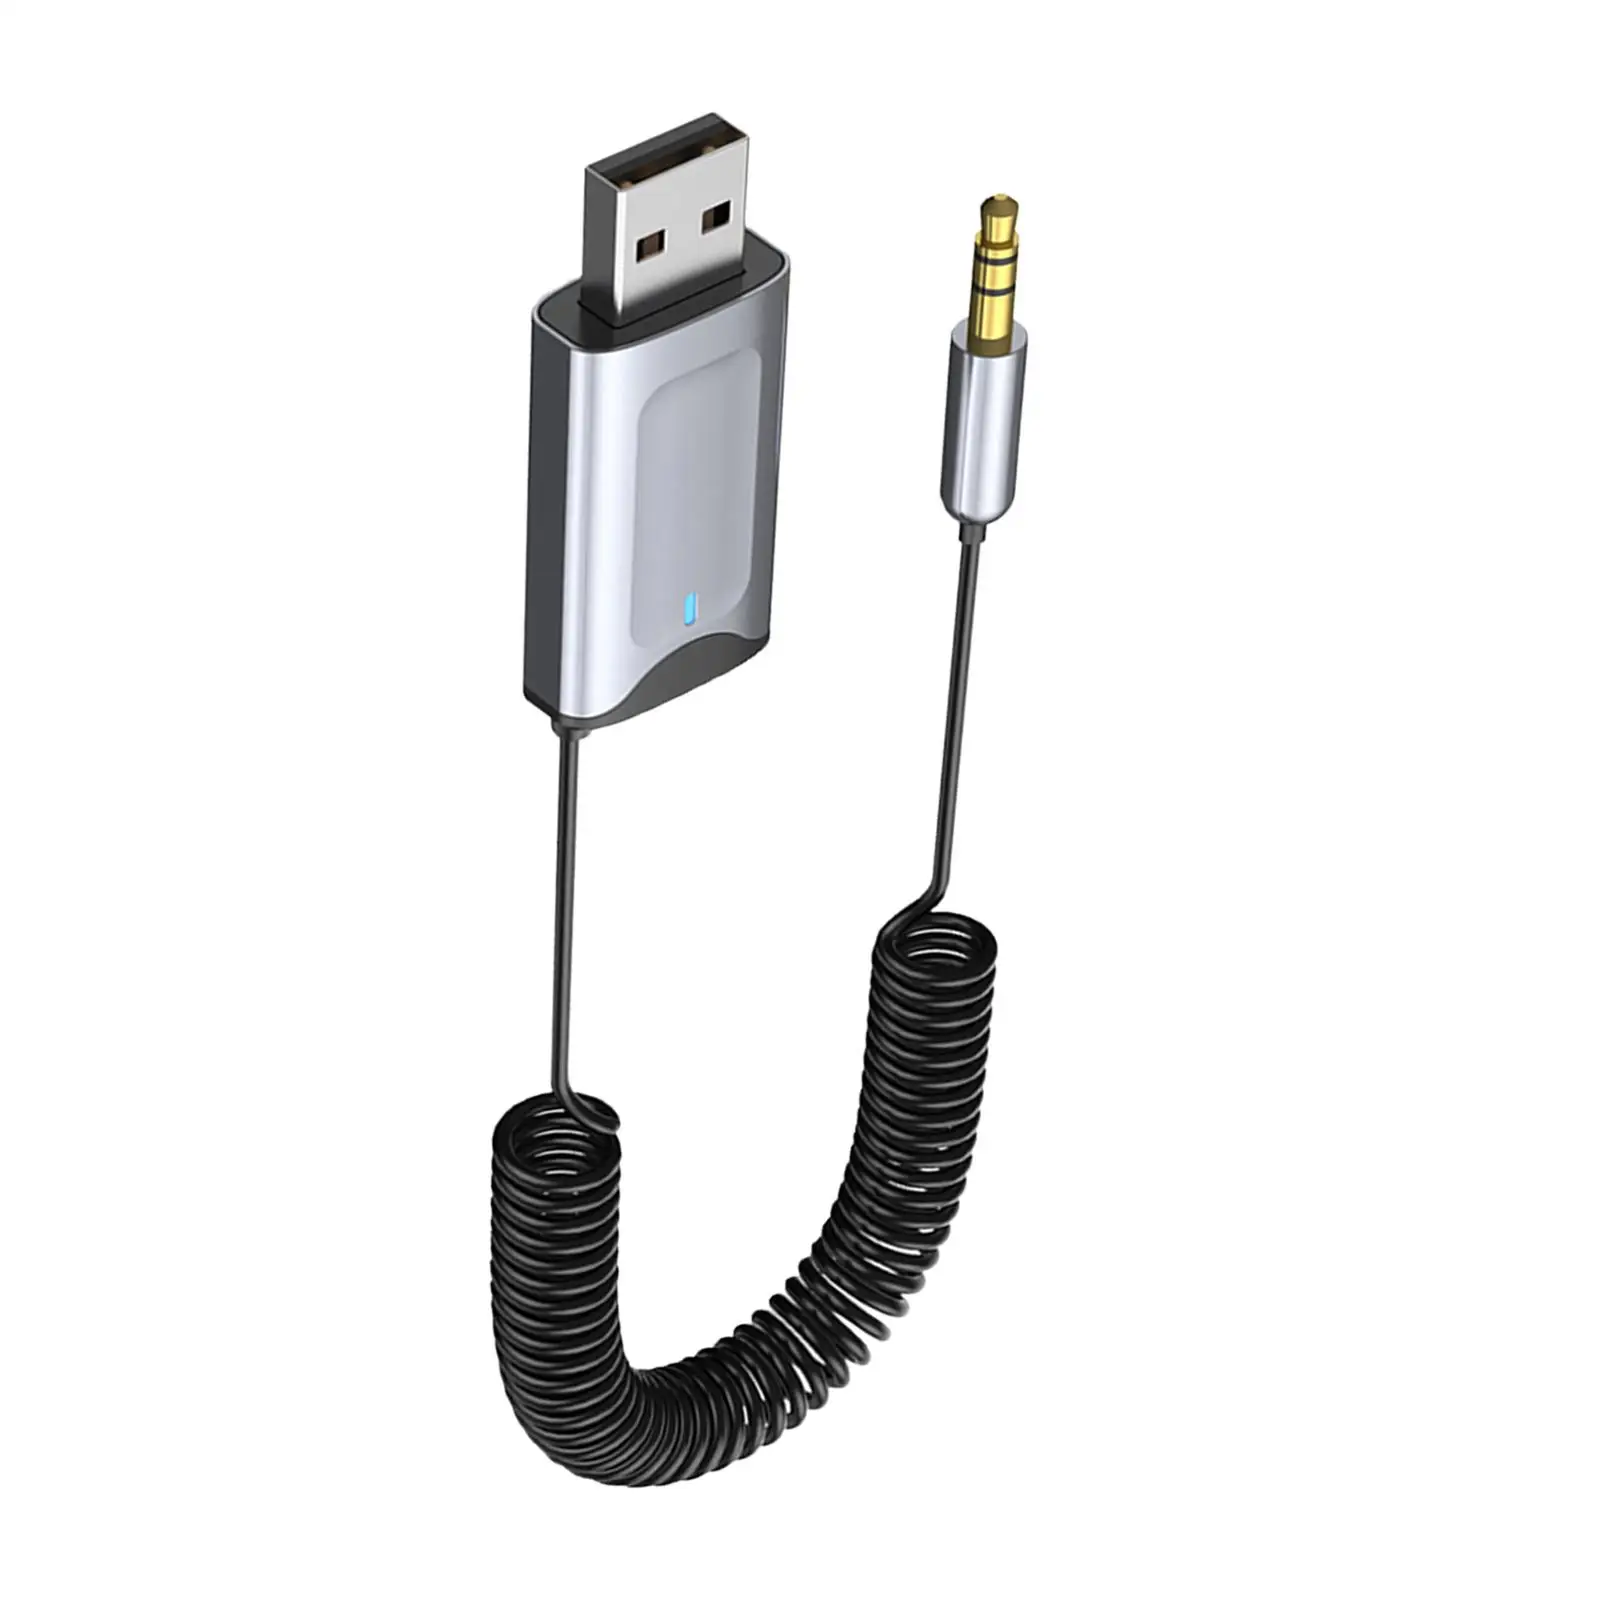 Car USB AUX Receiver Adapter 3.5mm Jack Audio Receiver Speaker Built in Mic for Phones